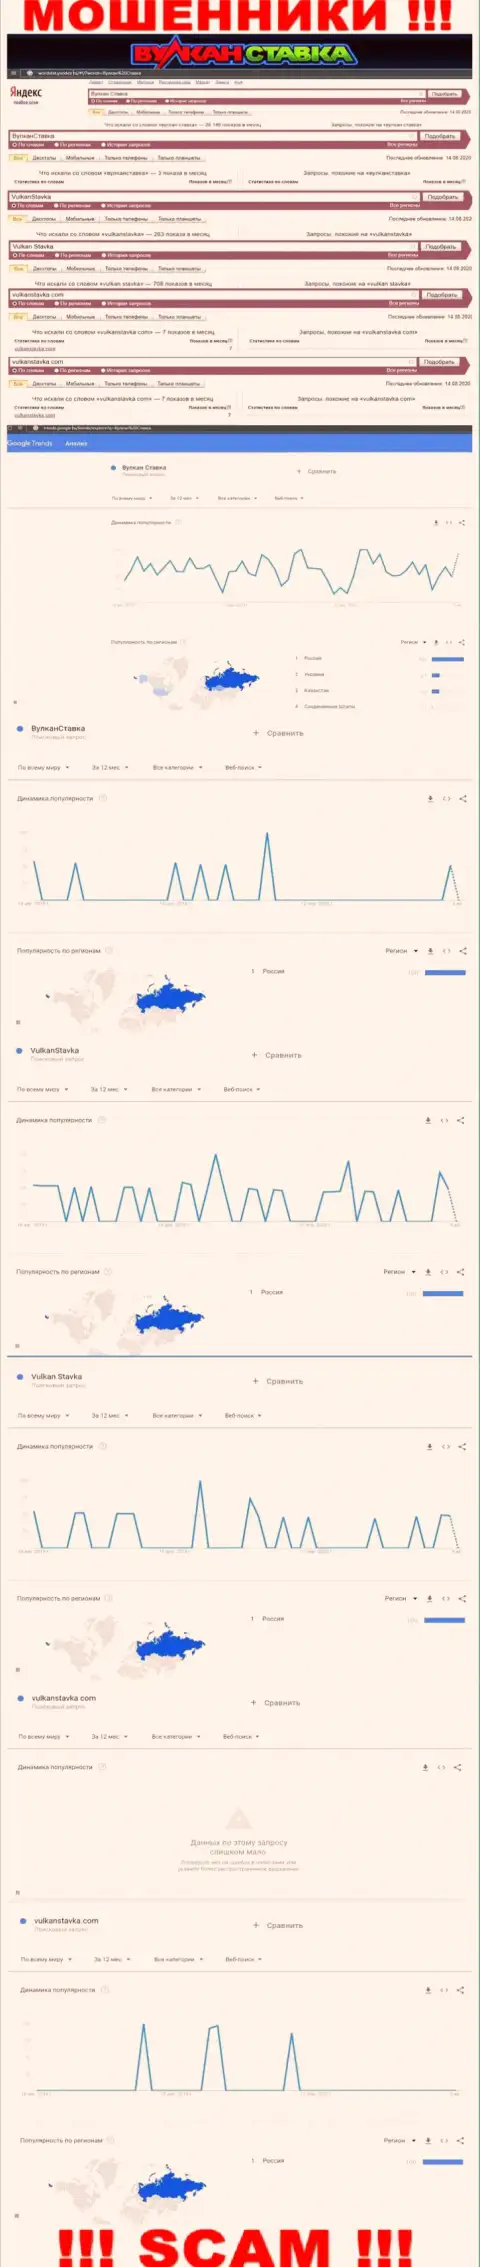 Статистика бренда Vulkan Stavka, какое количество онлайн-запросов у указанной шарашки